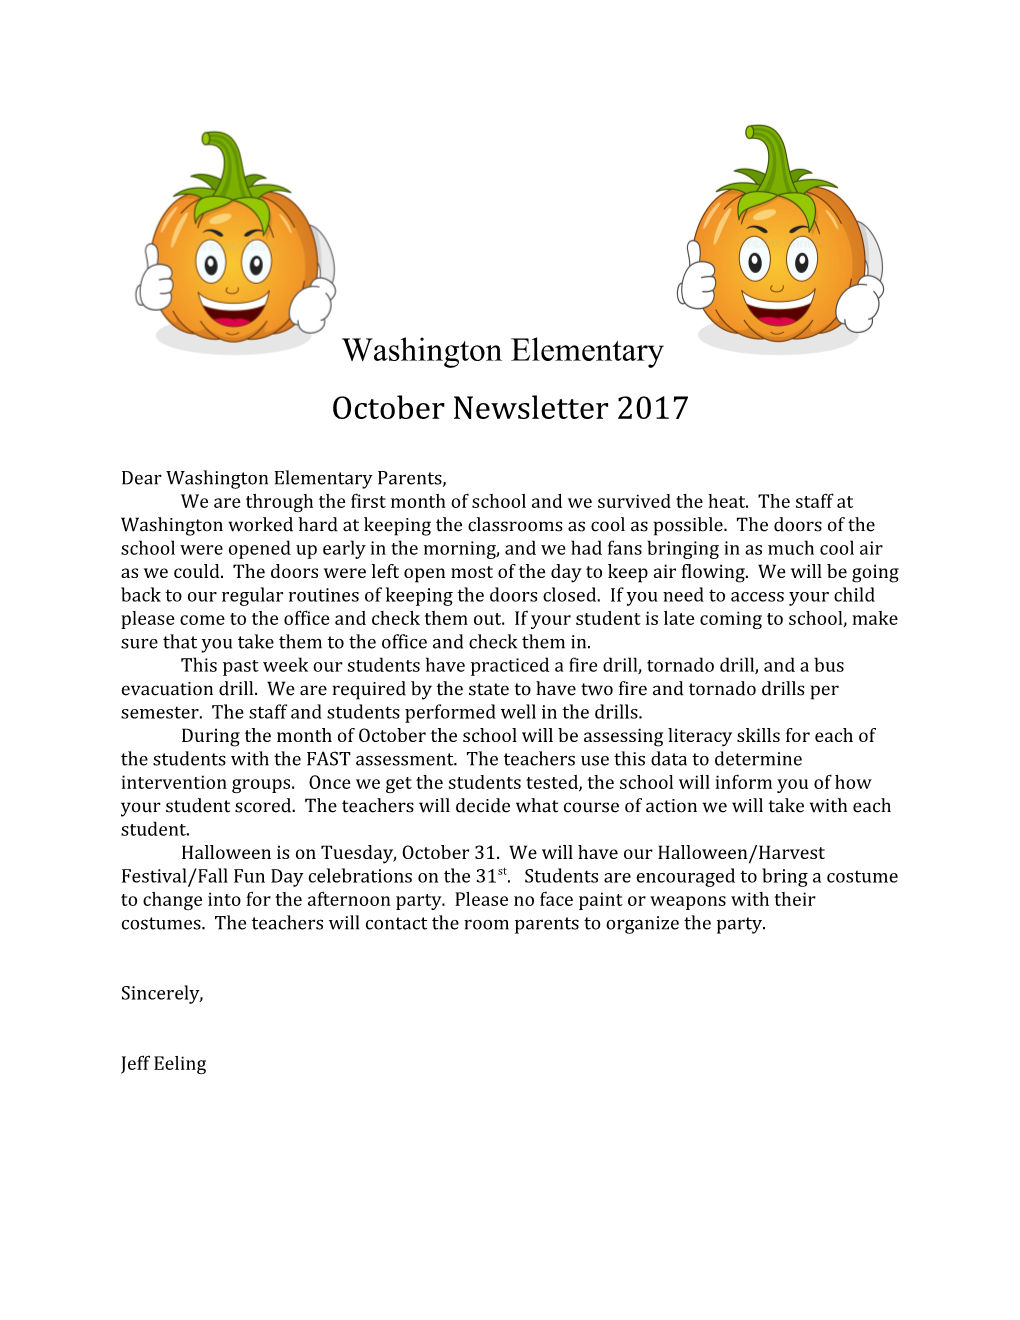 Dear Washington Elementary Parents